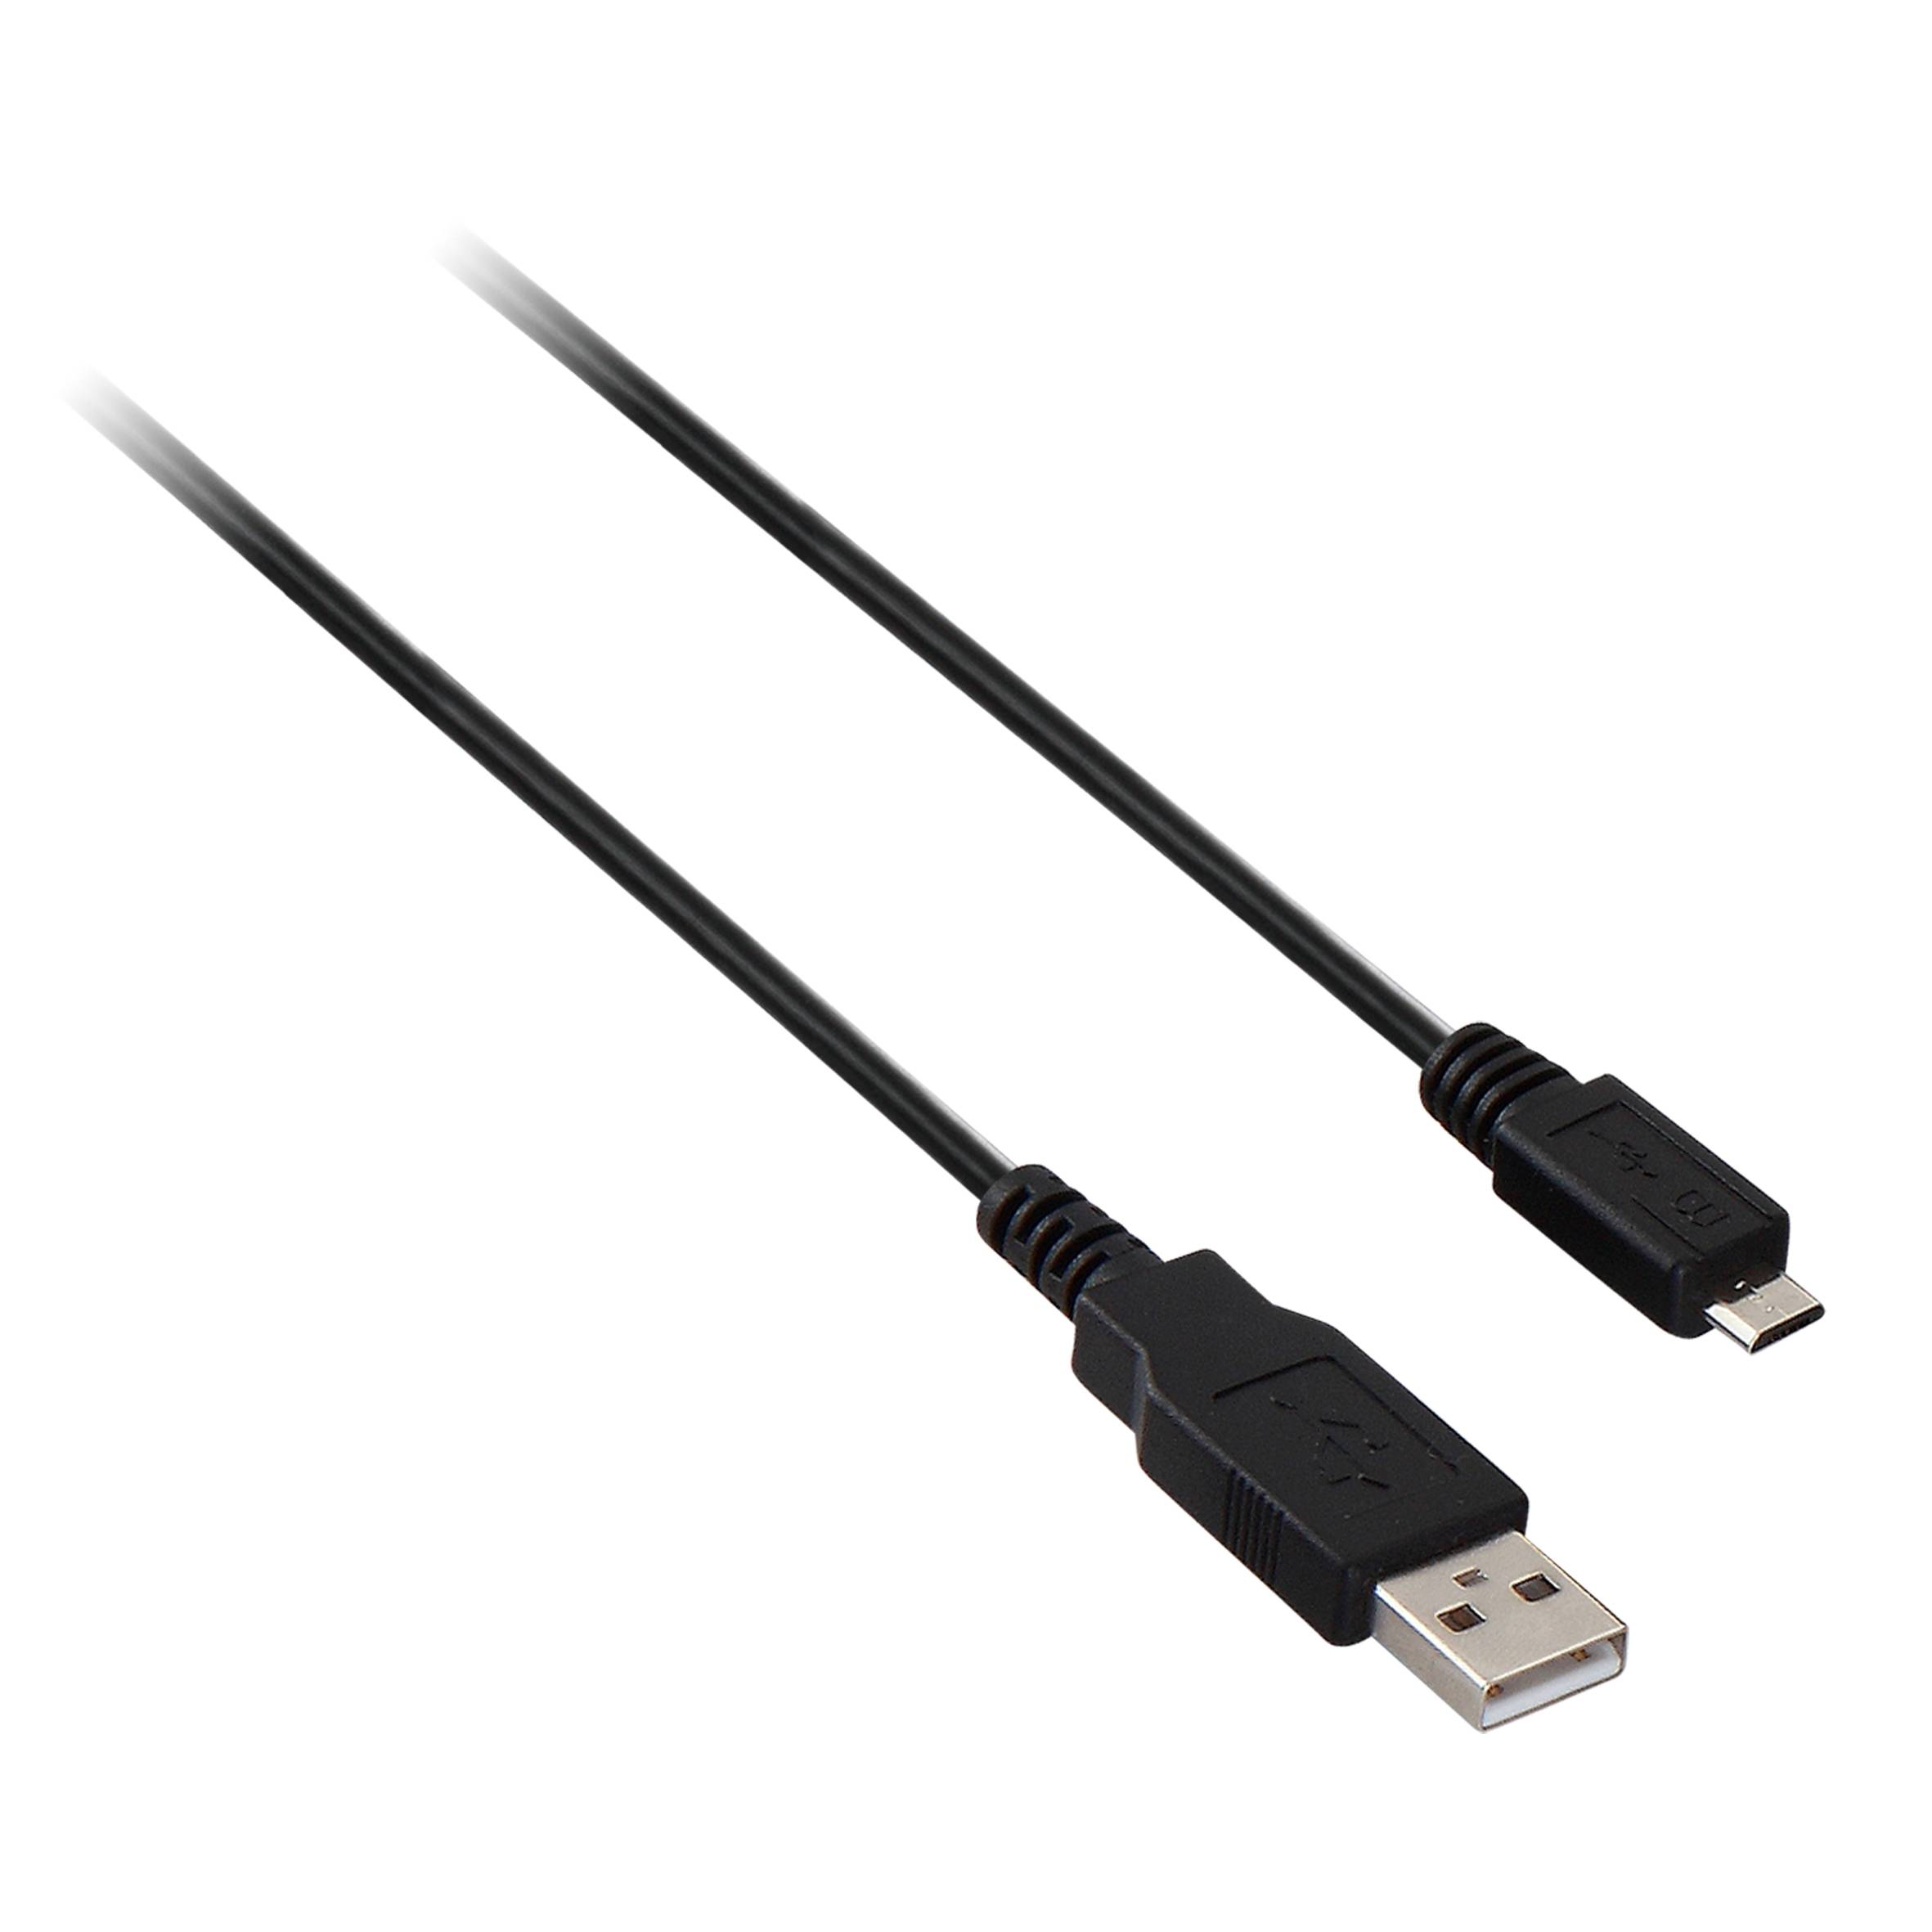 Rca Informatique - image du produit : USB2.0 A TO MICRO-B CABLE 1M BK DATA CABLE 480MBPS PERIPHERALS